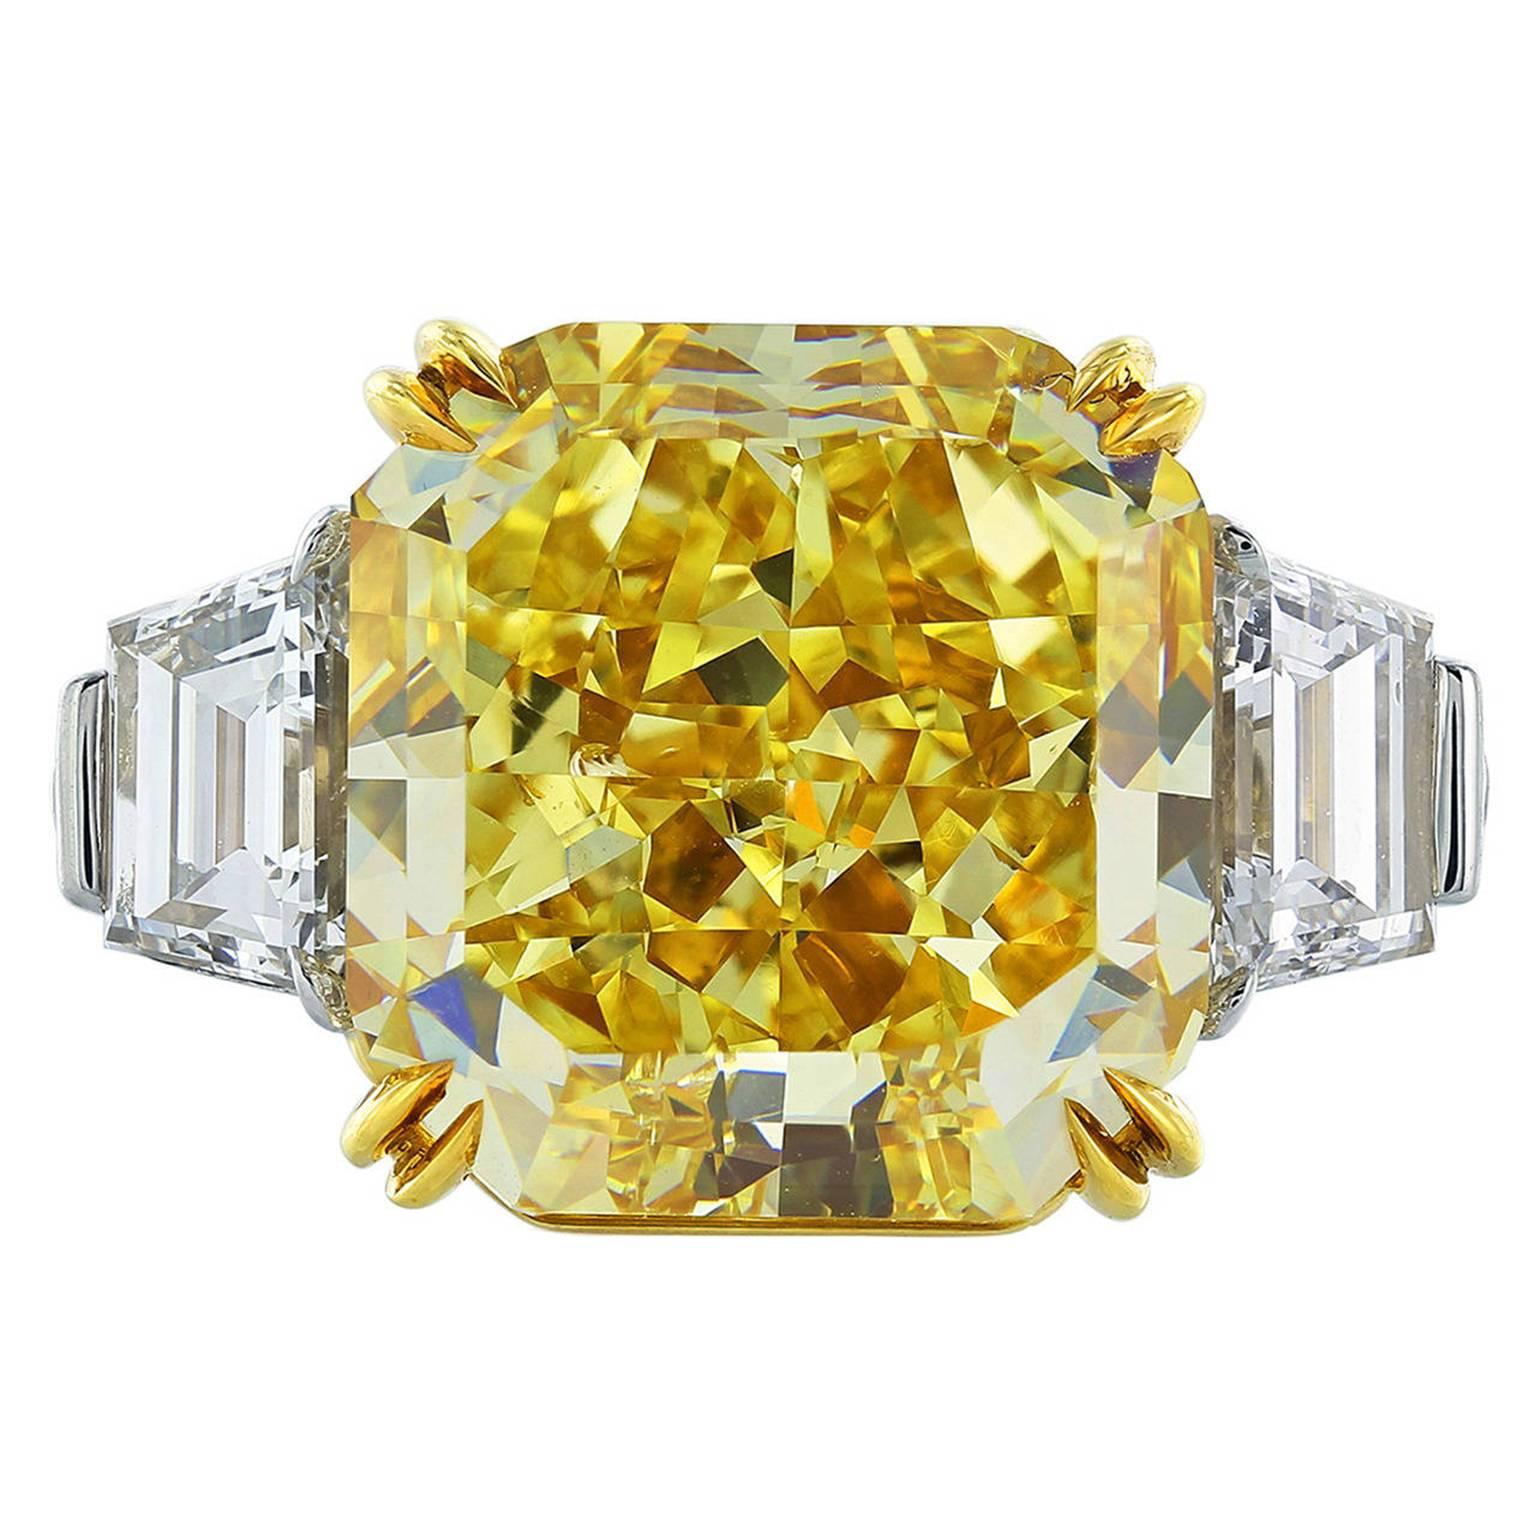 Prächtiger 10,18 Karat Fancy Intense Yellow Internally Flawless Diamond Ring